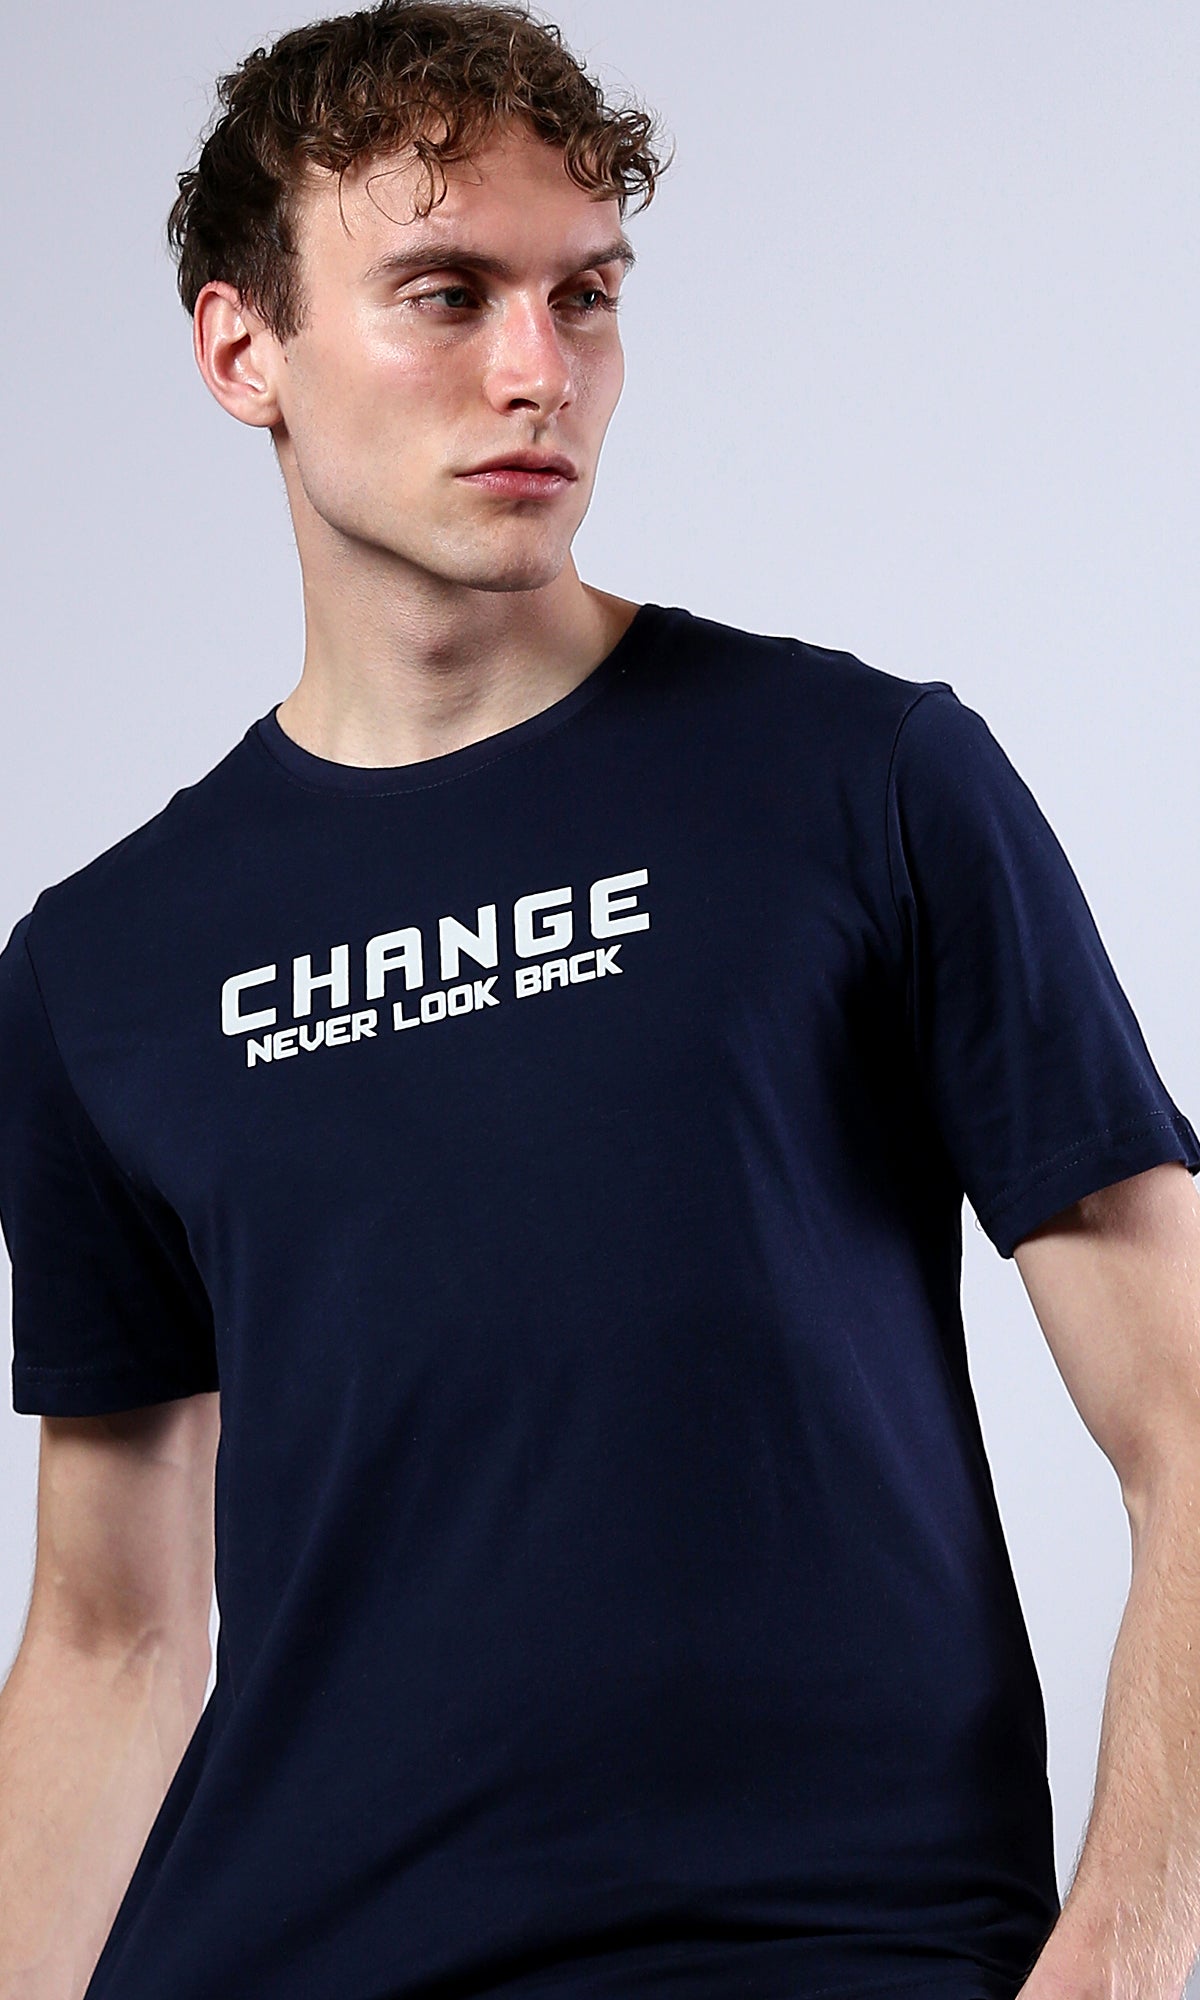 O179019 Short Sleeves Printed "Change" Navy Blue Tee